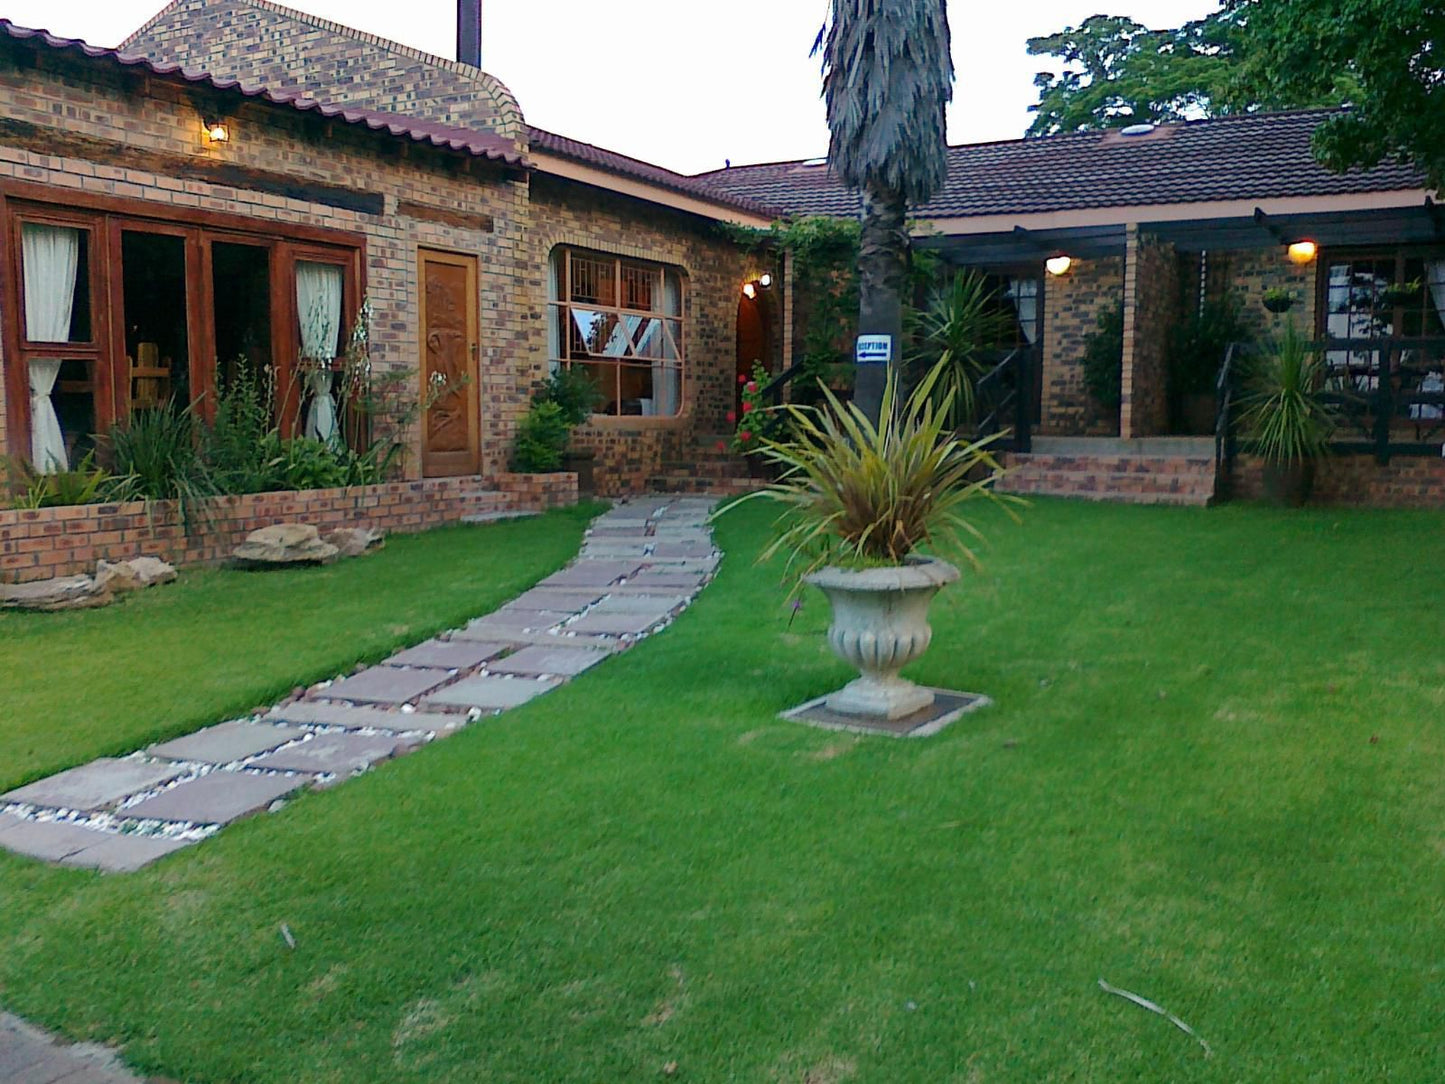 Khokha Moya Guest House Ermelo Mpumalanga South Africa House, Building, Architecture, Garden, Nature, Plant